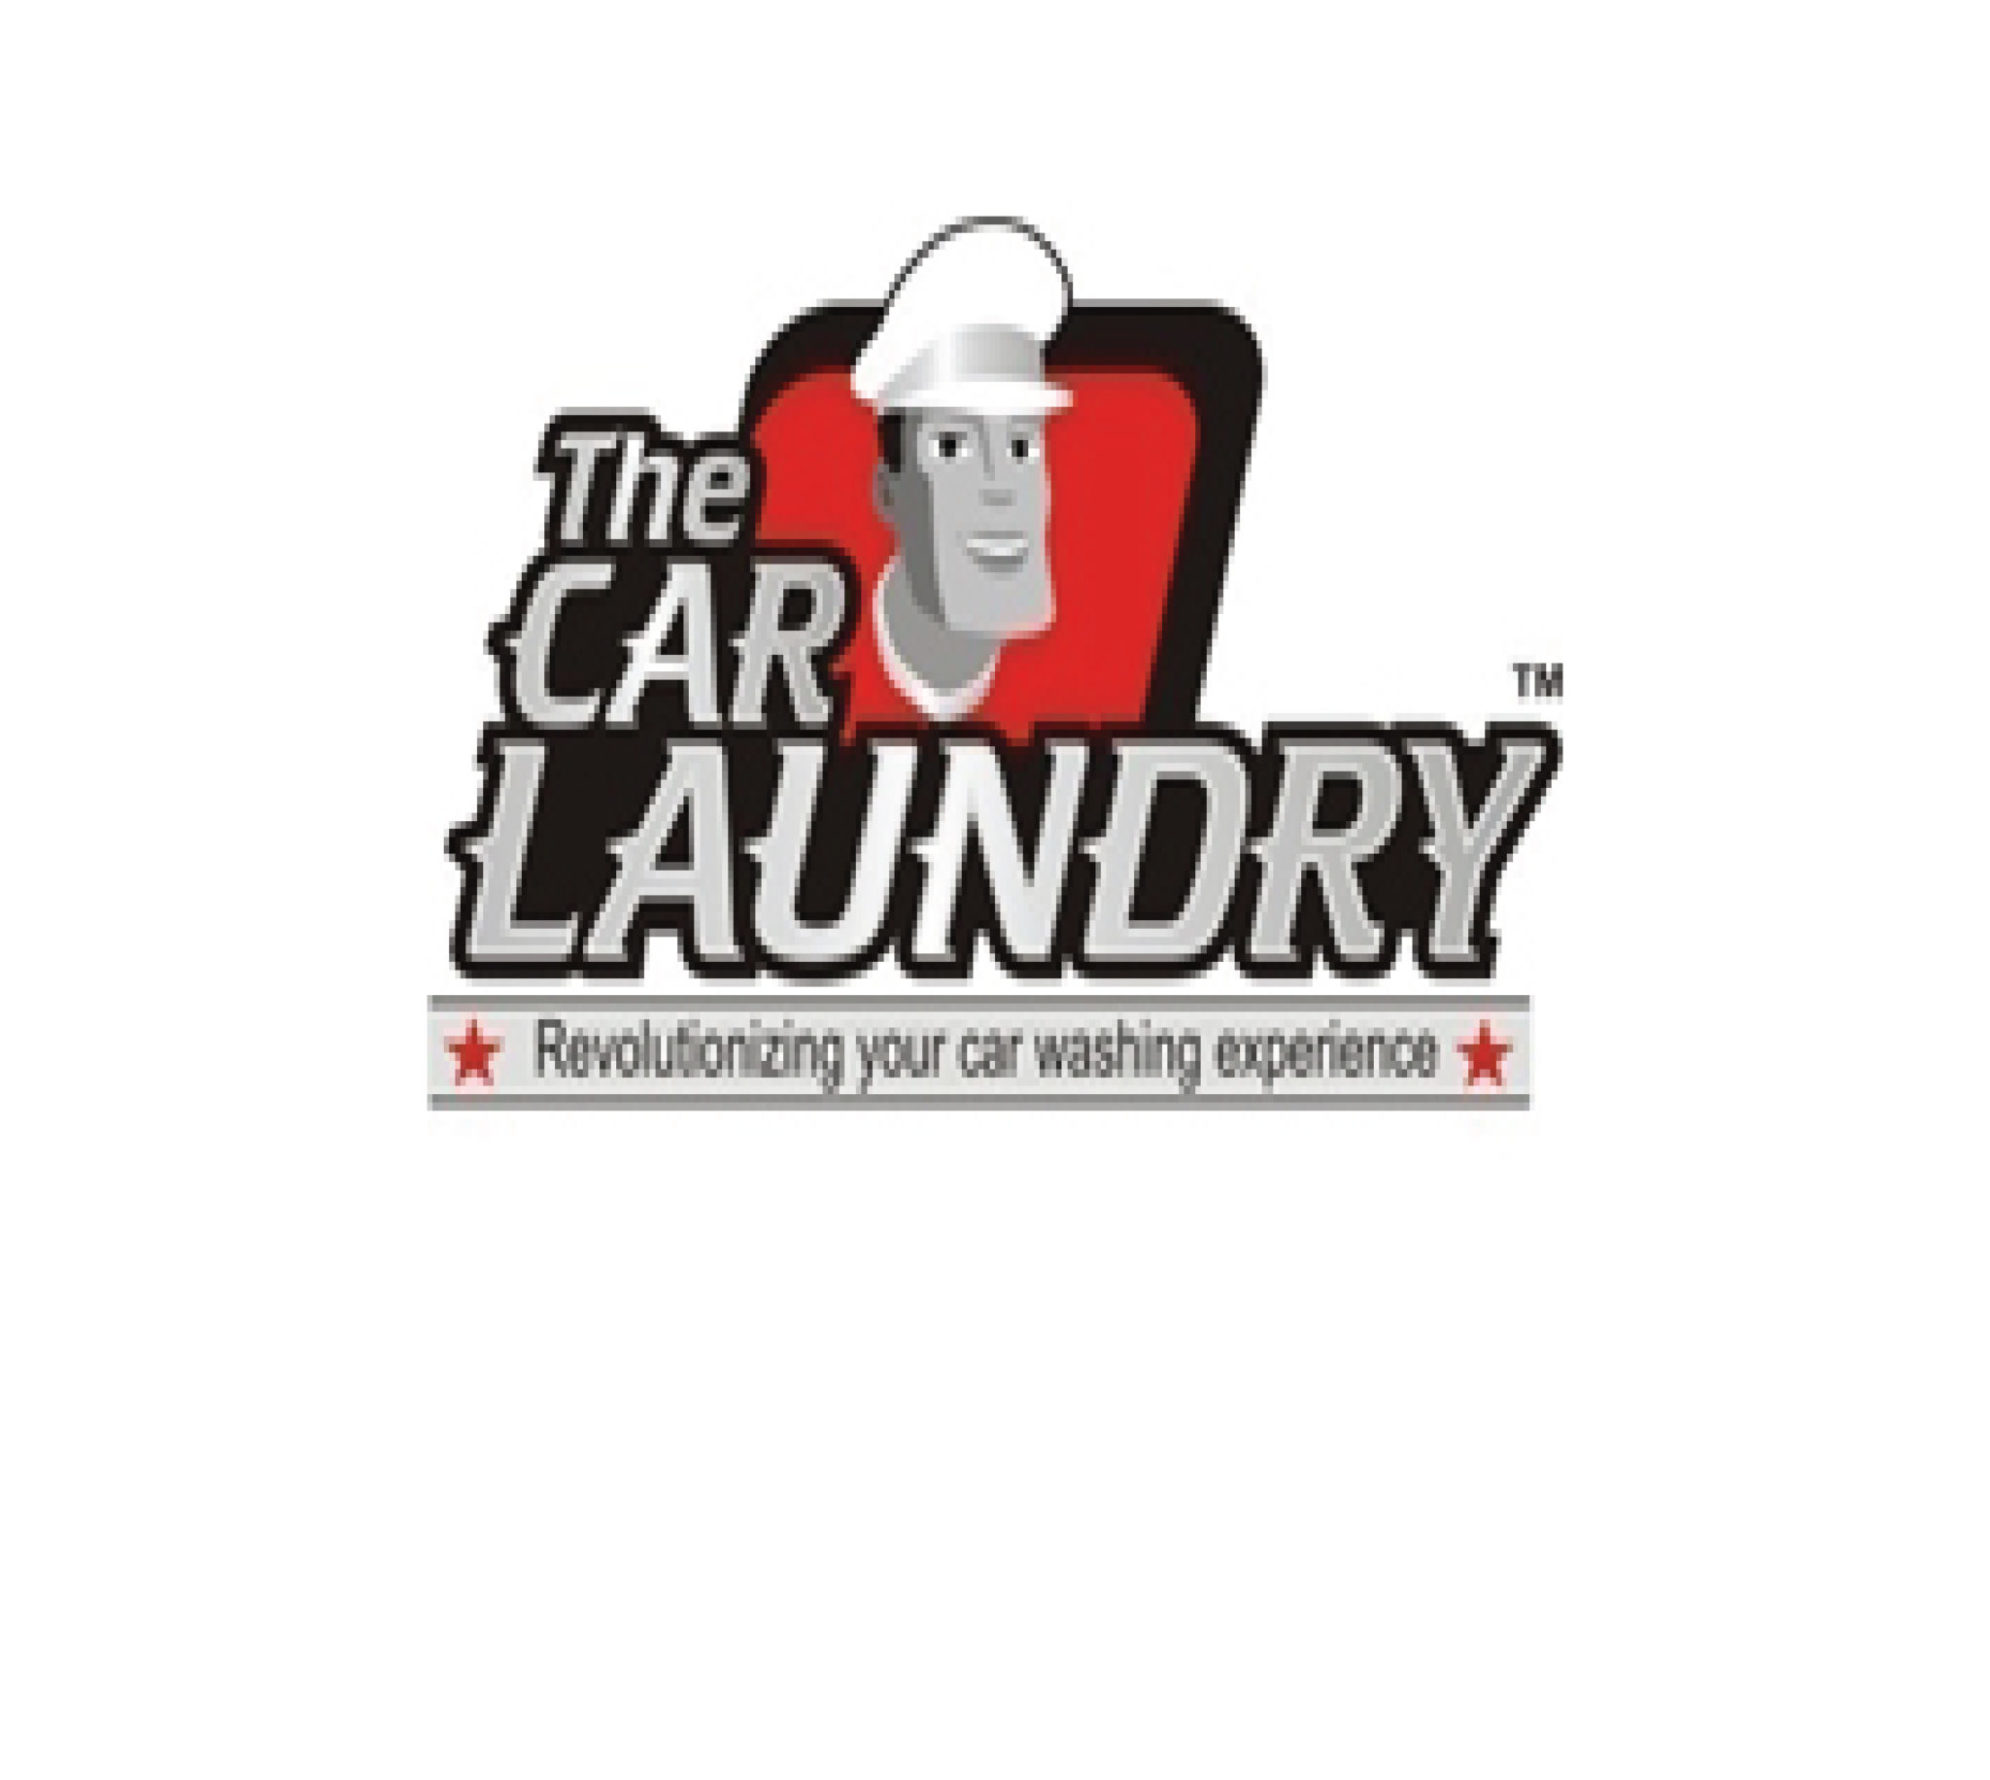 The Car Laundry